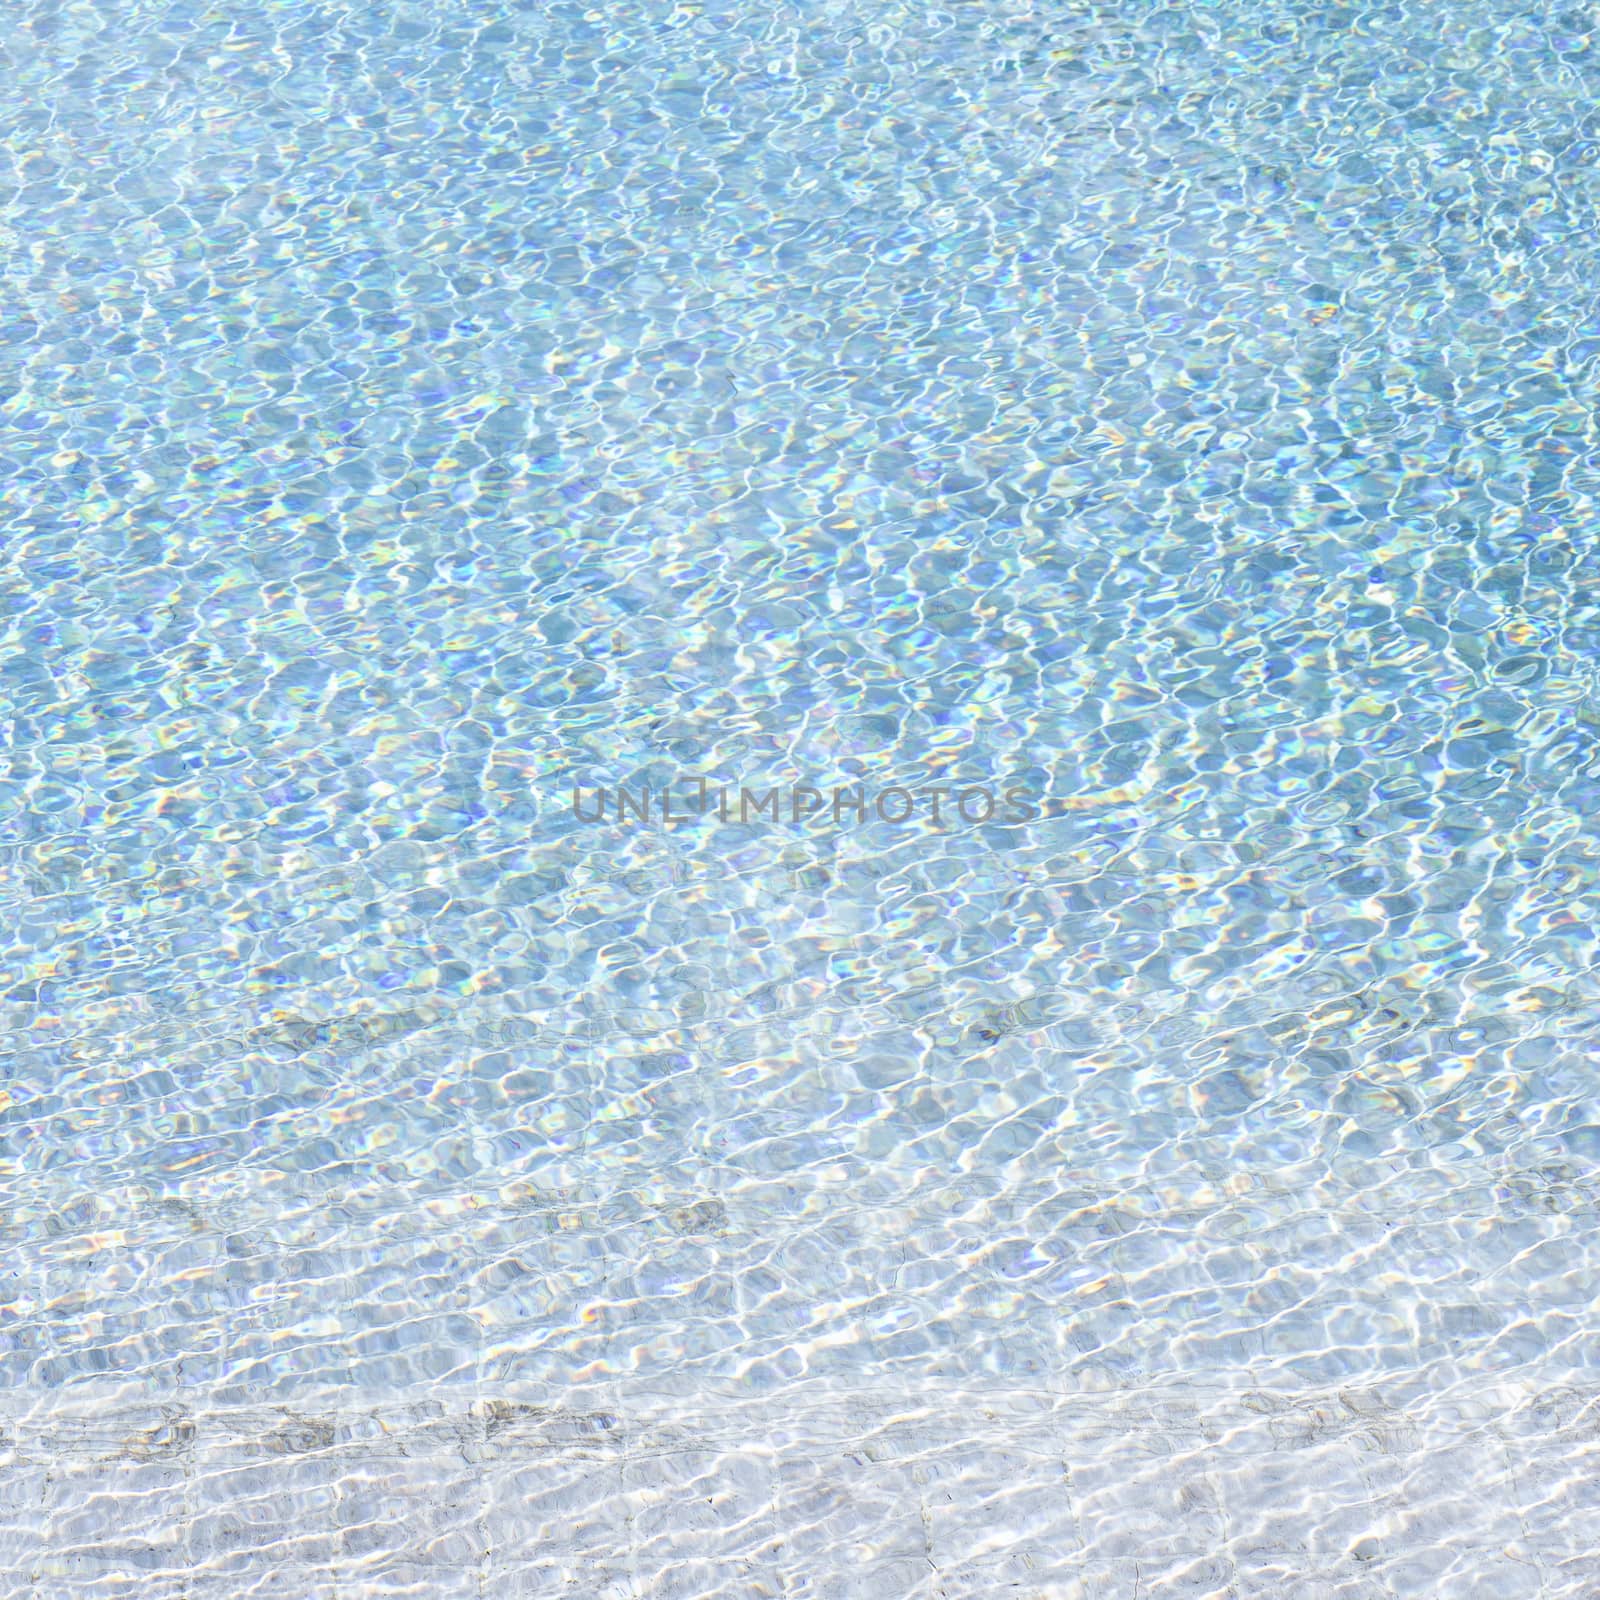 Blue swimming pool reflecting the sun rippled